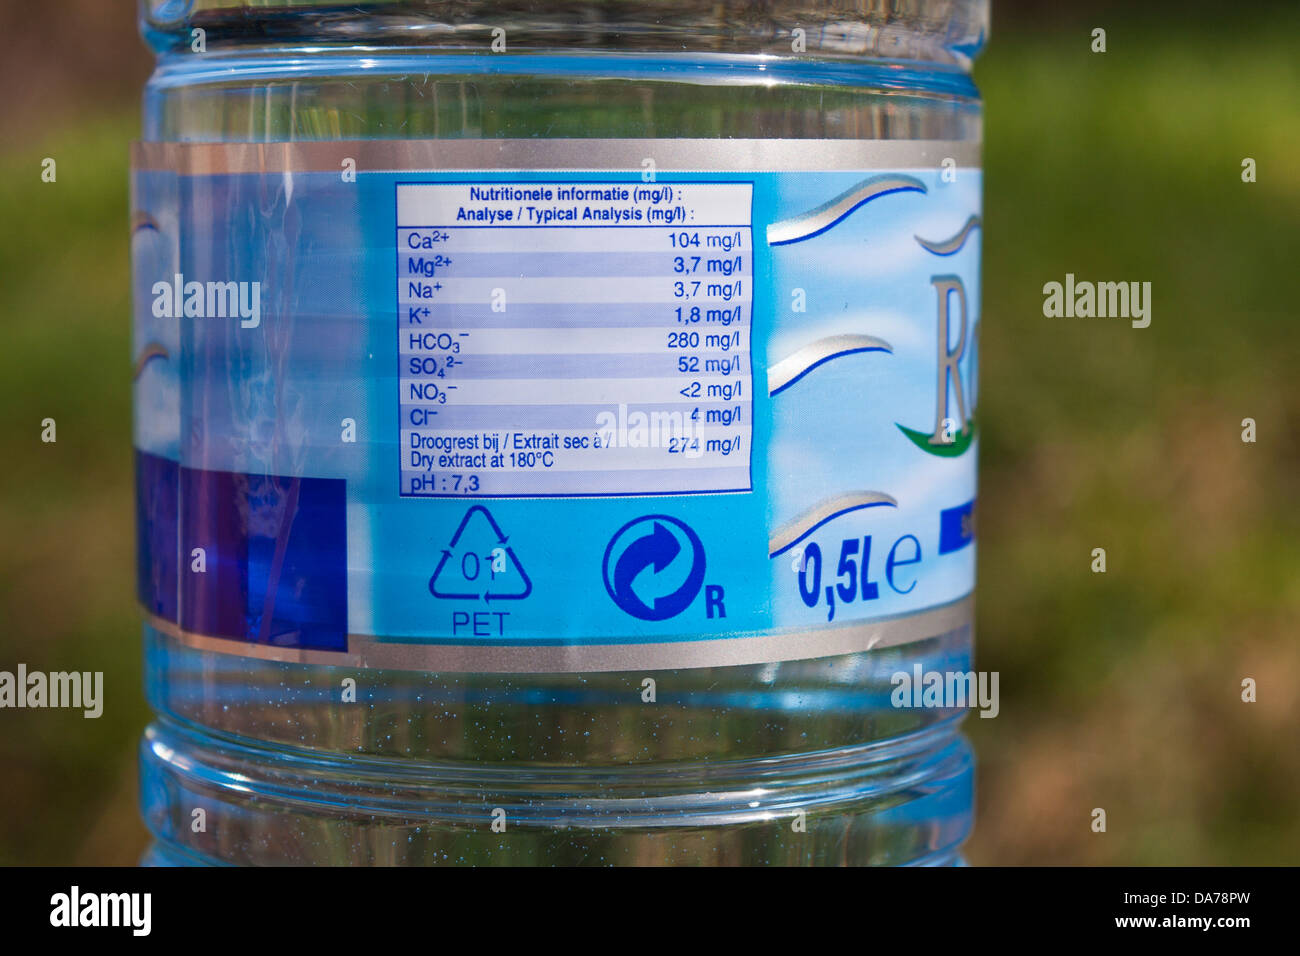 Aquafina Water Bottle Label